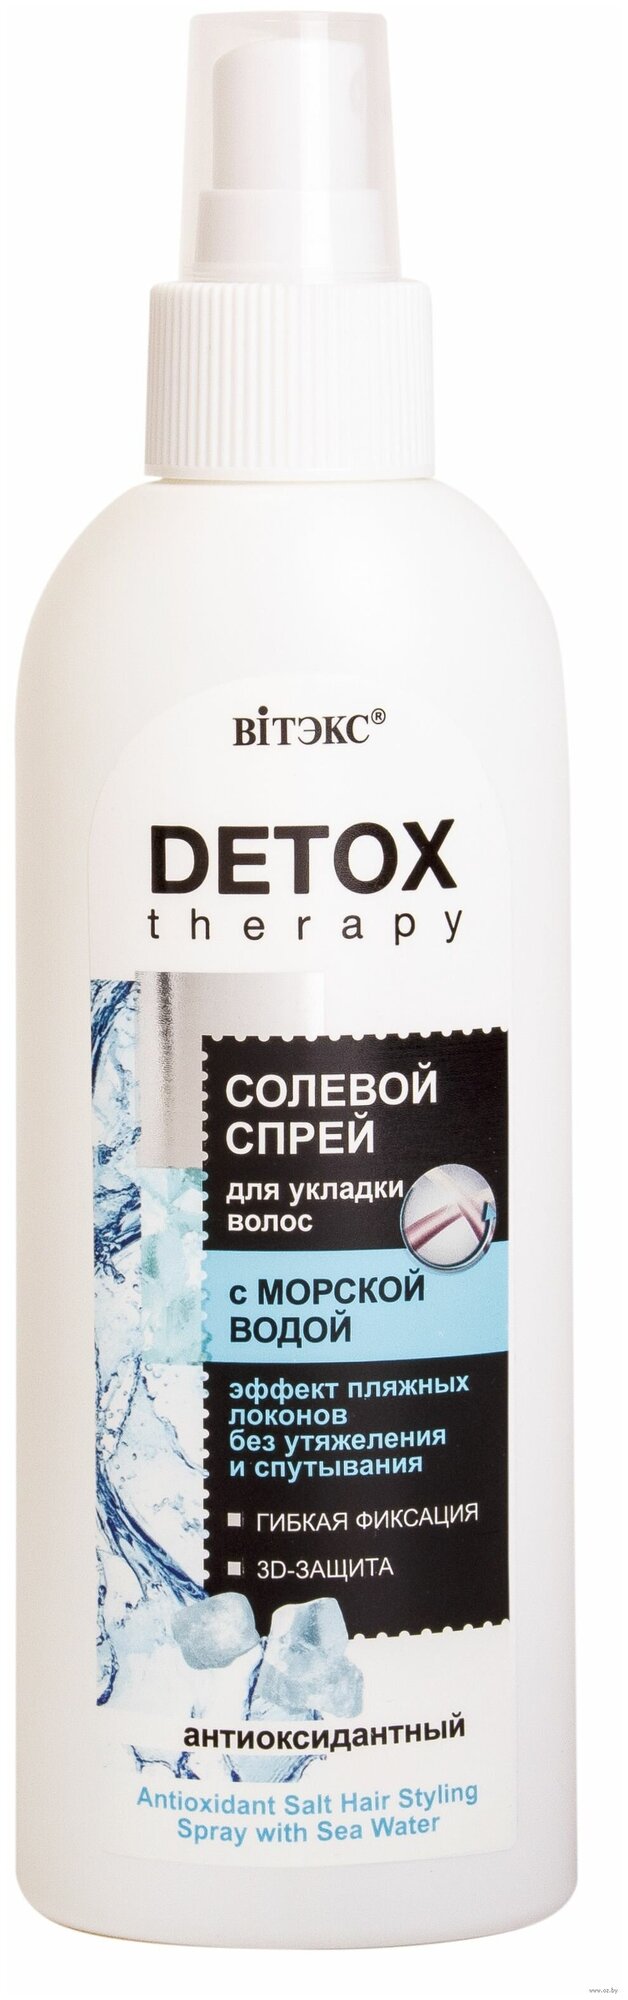 Витэкс Спрей для укладки волос Detox therapy, слабая фиксация, 200 мл